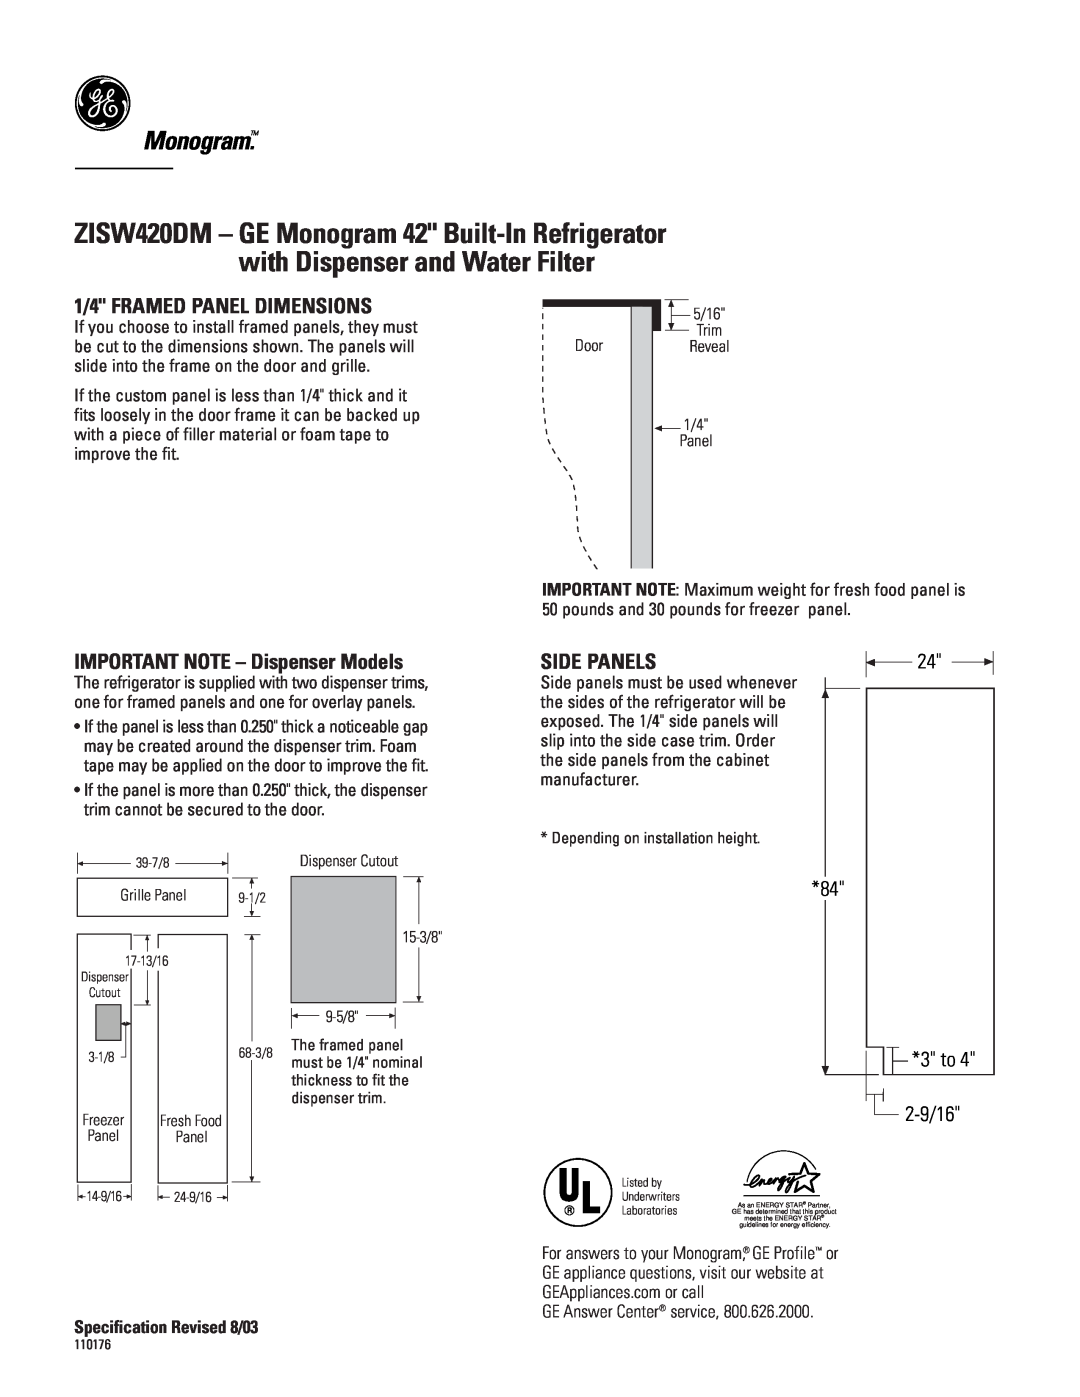 GE ZISW420DM Monogram, 1/4 FRAMED PANEL DIMENSIONS, IMPORTANT NOTE - Dispenser Models, Side Panels, 3 to 2-9/16 